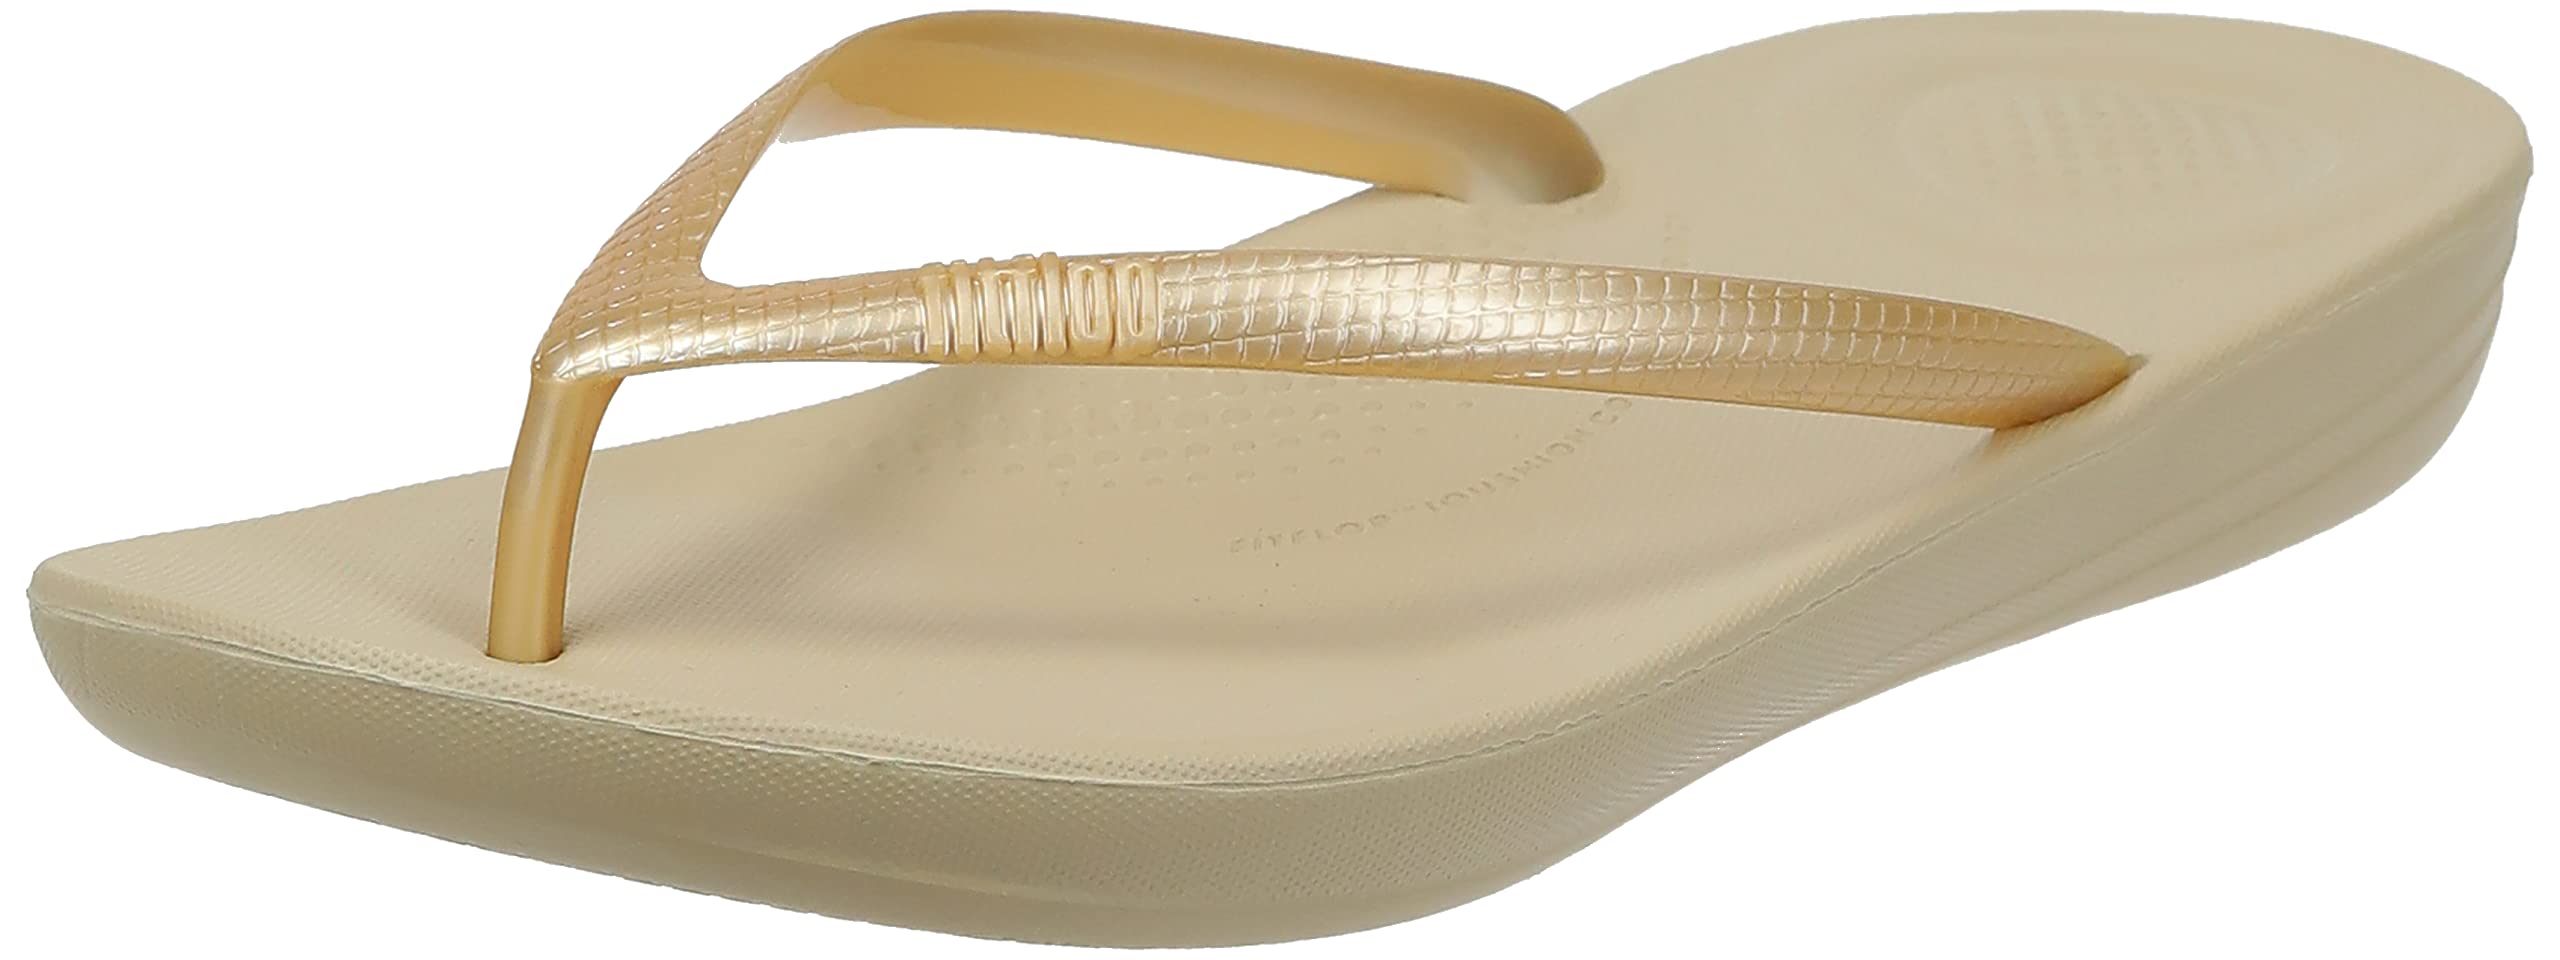 FitFlop Women's Iqushion Pearlized Ergonomic Flip-Flops Wedge Sandal, 0